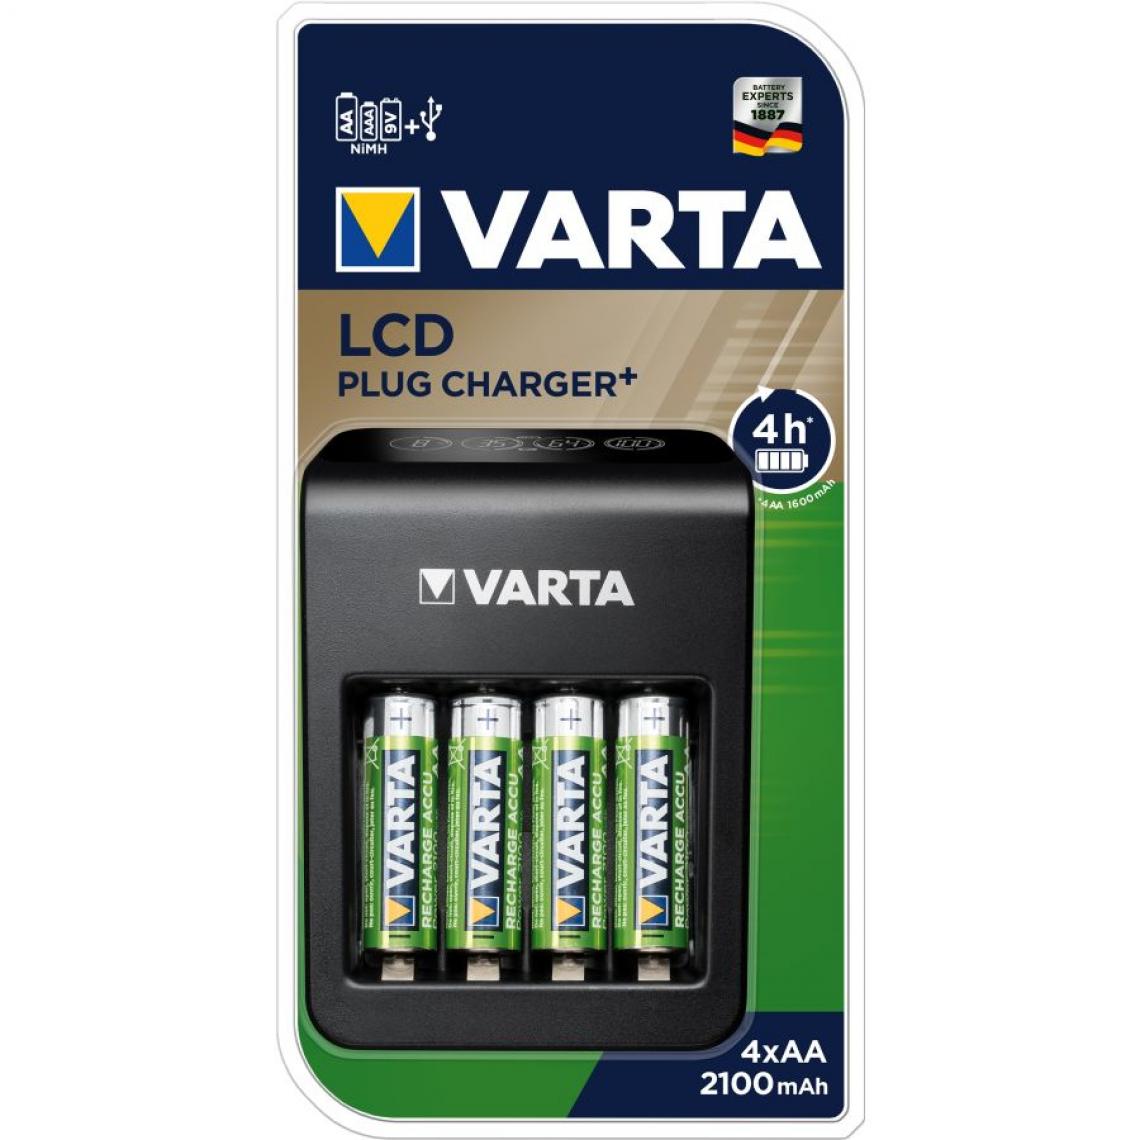 Varta - Chargeur VARTA LCD Plug + 4 piles AA - 57687101441 - Piles rechargeables